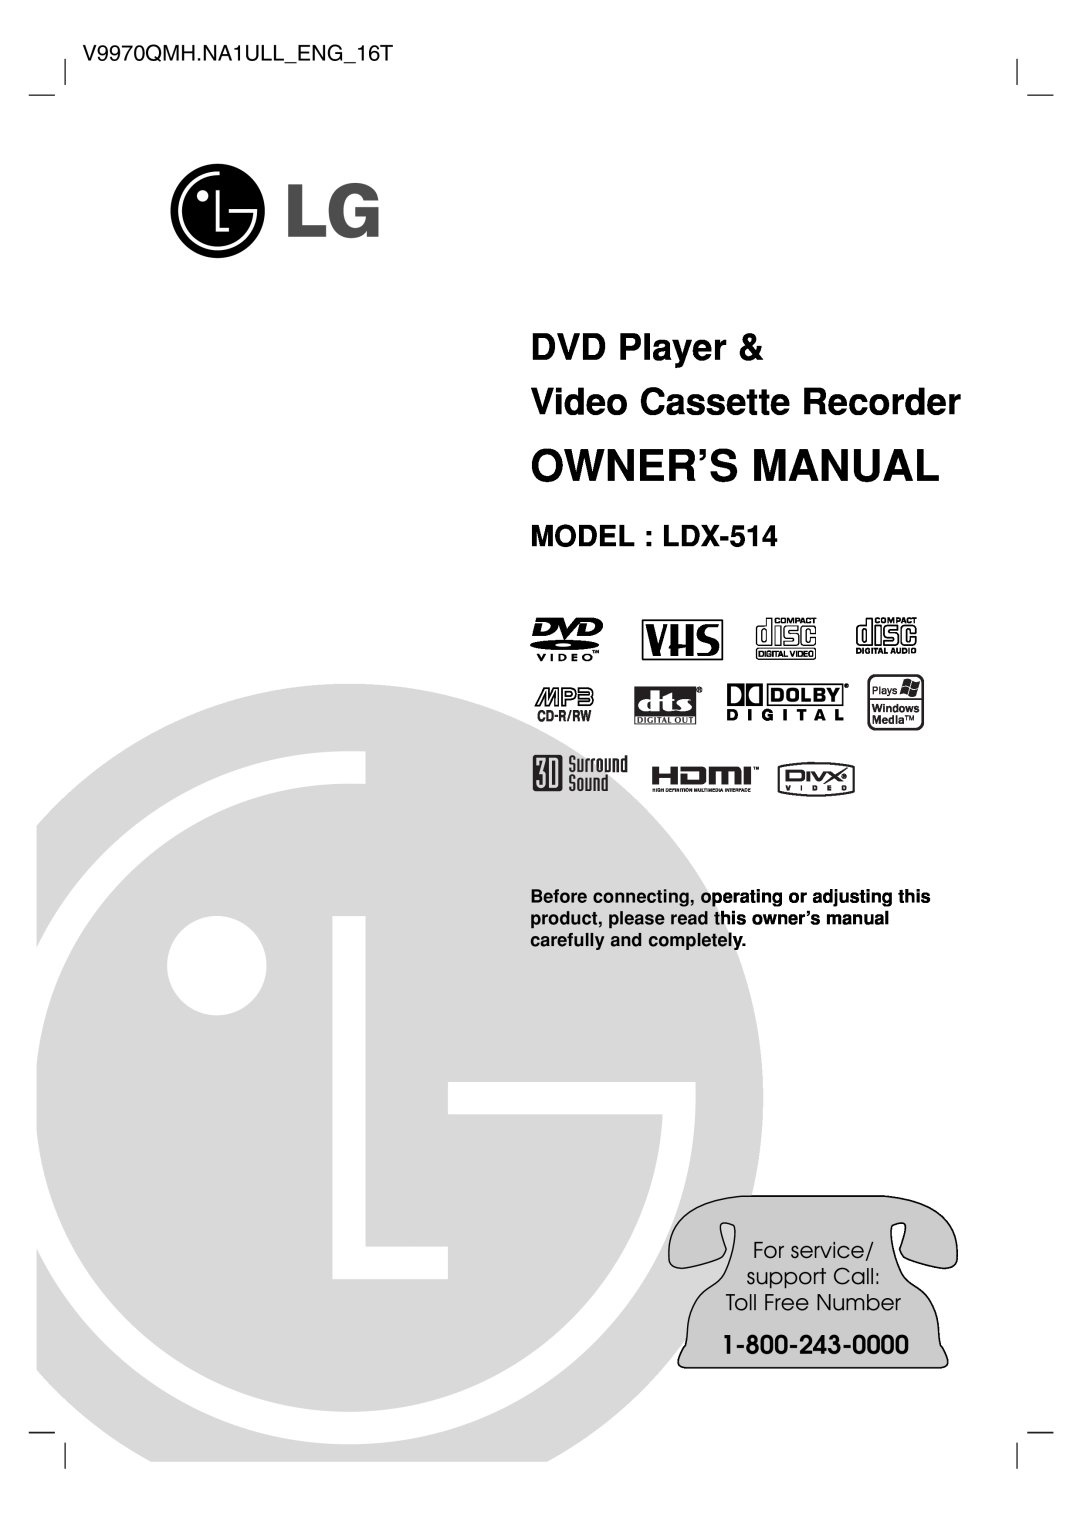 LG Electronics owner manual DVD Player Video Cassette Recorder, MODEL LDX-514, V9970QMH.NA1ULLENG16T 